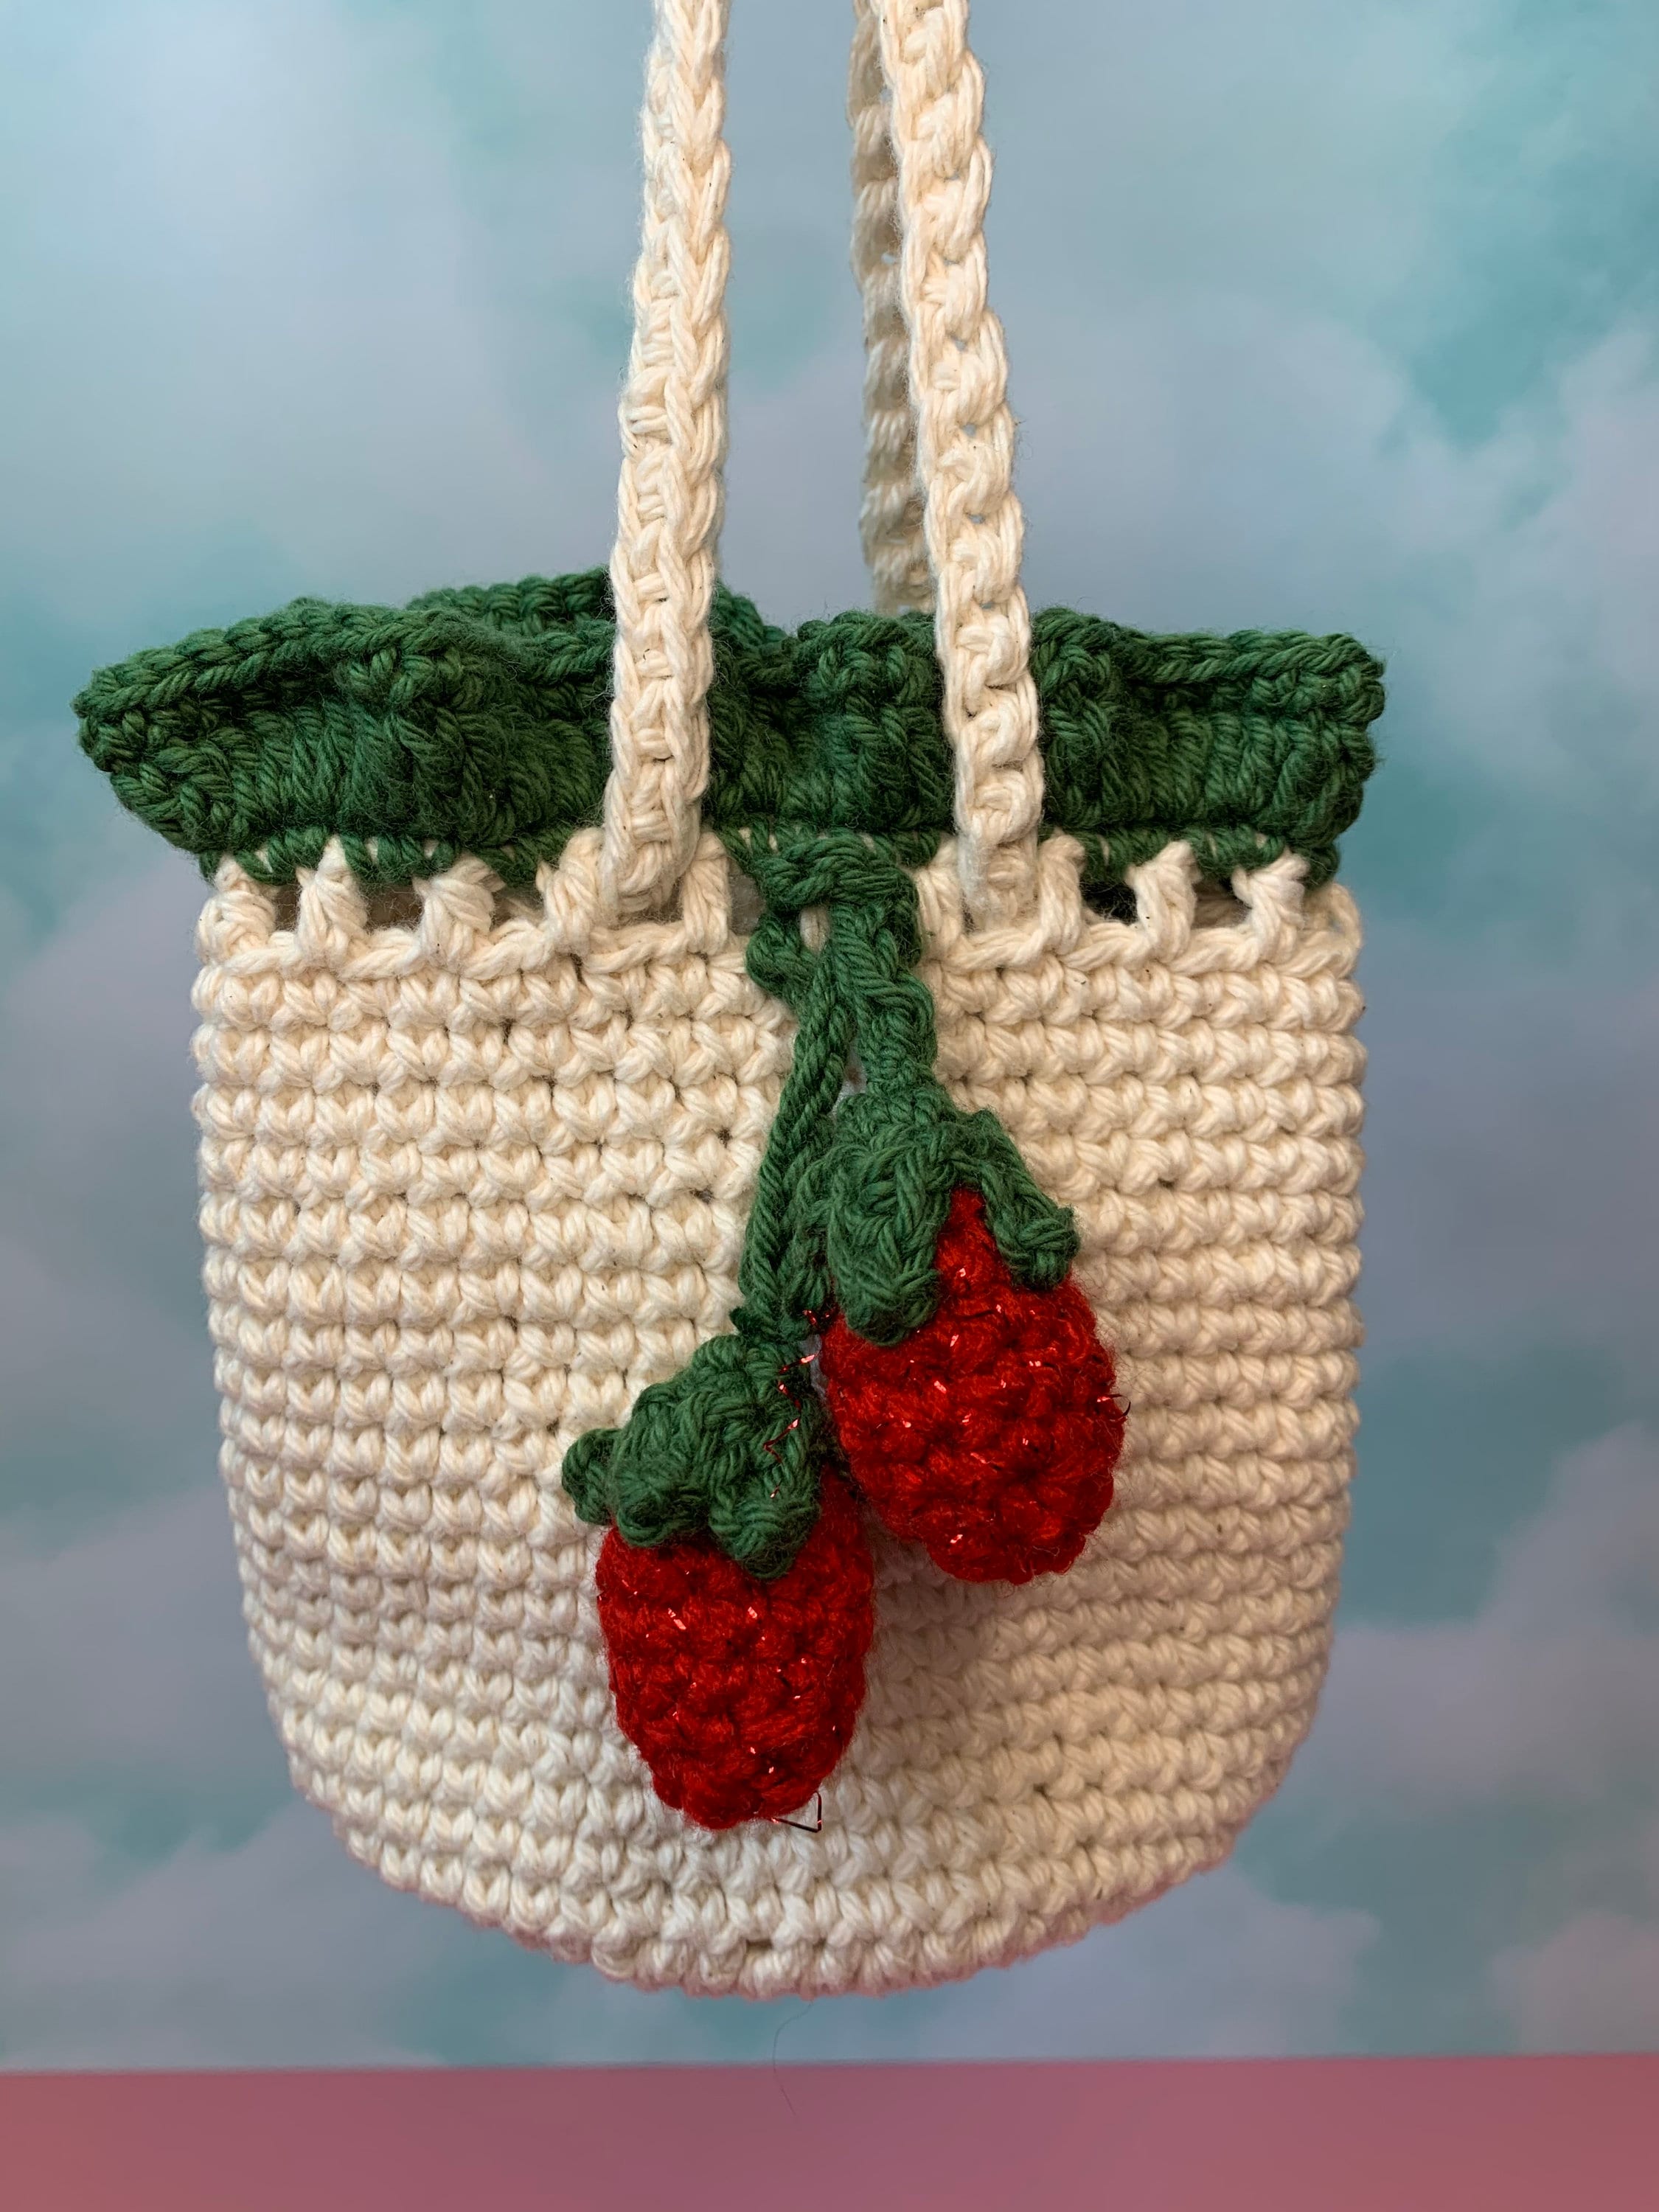 Strawberry sachet satchel Knit fruit bag Crochet berry clutch | Etsy